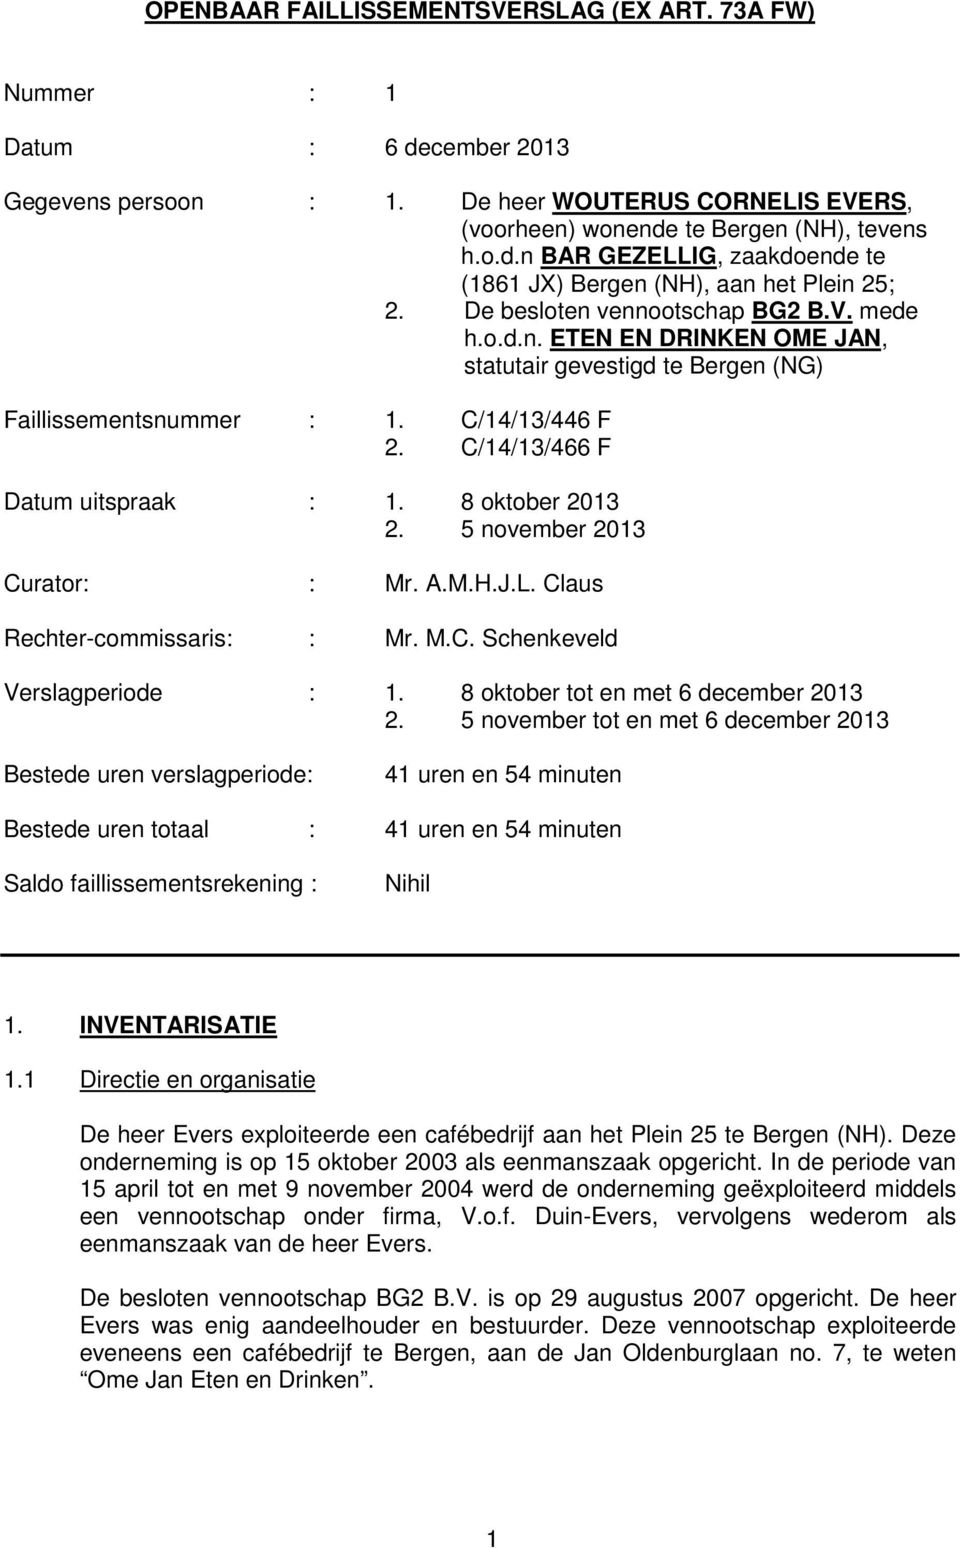 8 oktober 2013 2. 5 november 2013 Curator: : Mr. A.M.H.J.L. Claus Rechter-commissaris: : Mr. M.C. Schenkeveld Verslagperiode : 1. 8 oktober tot en met 6 december 2013 2.